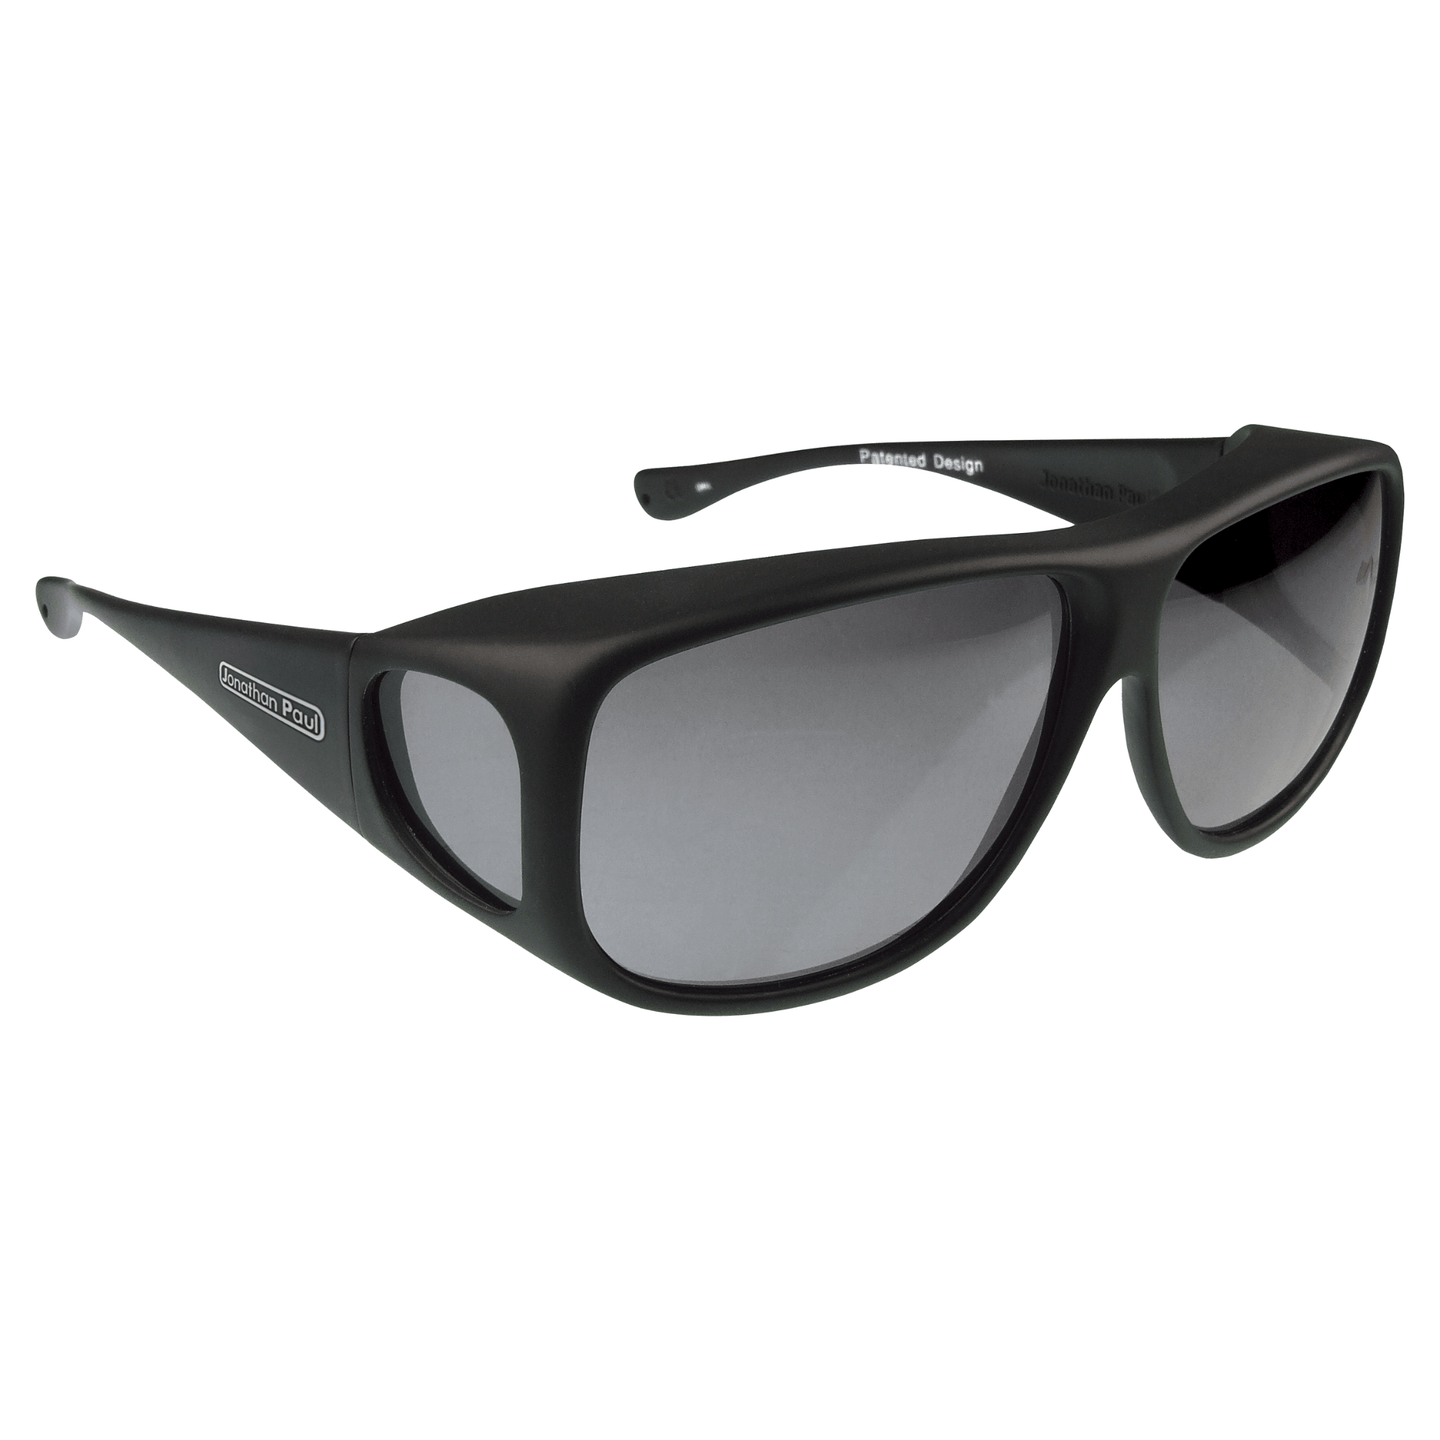 Fitover Sunglasses 'Aviator' Matte Black - Grey Lens